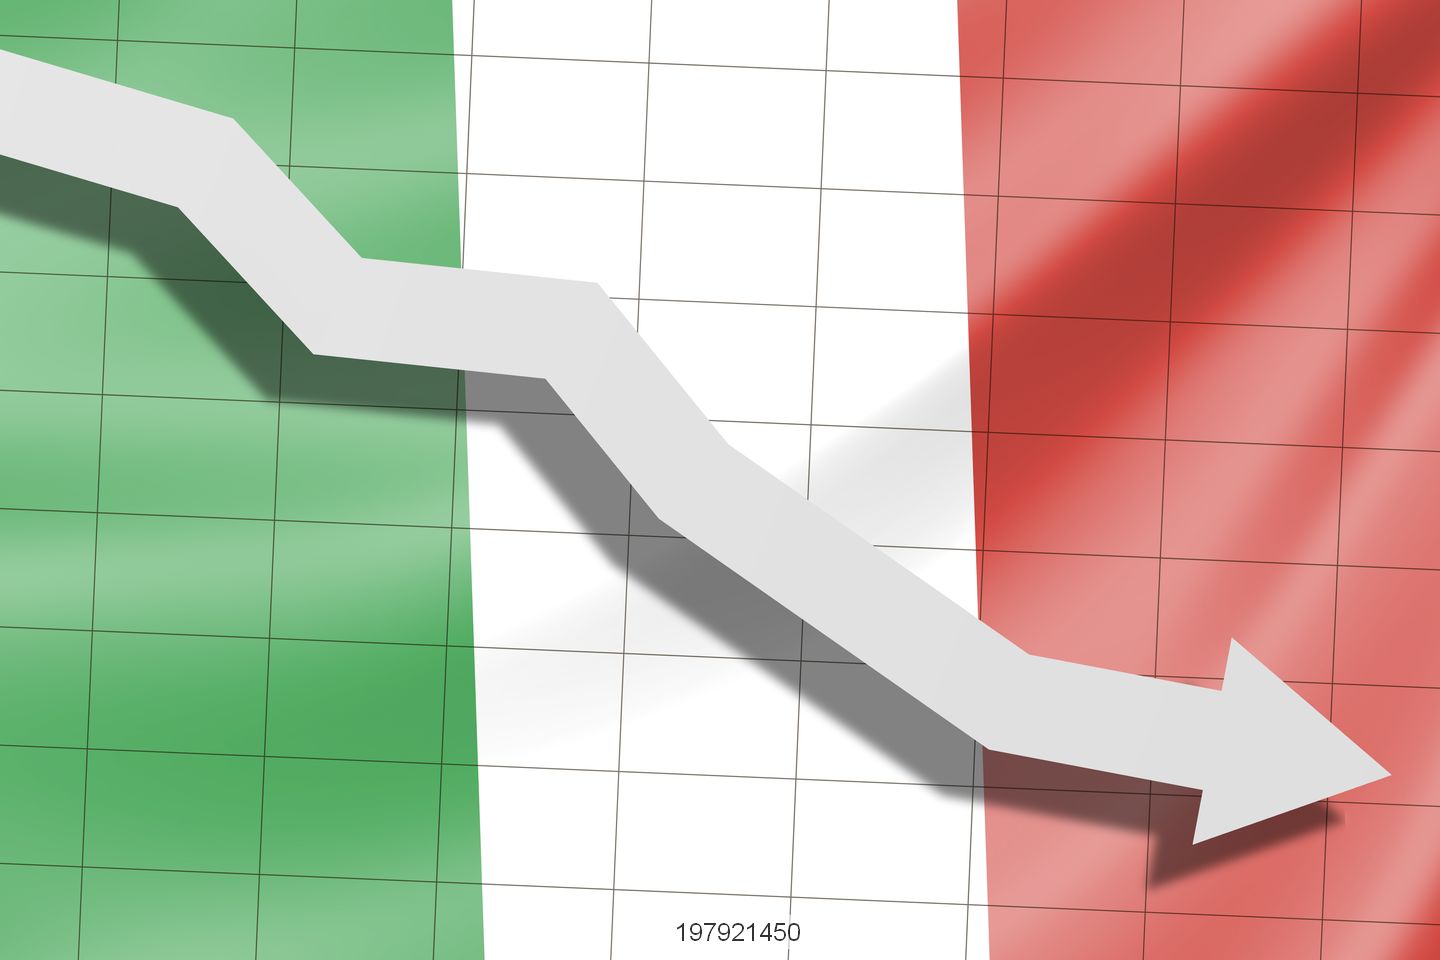 Italian flag with arrow pointing downward